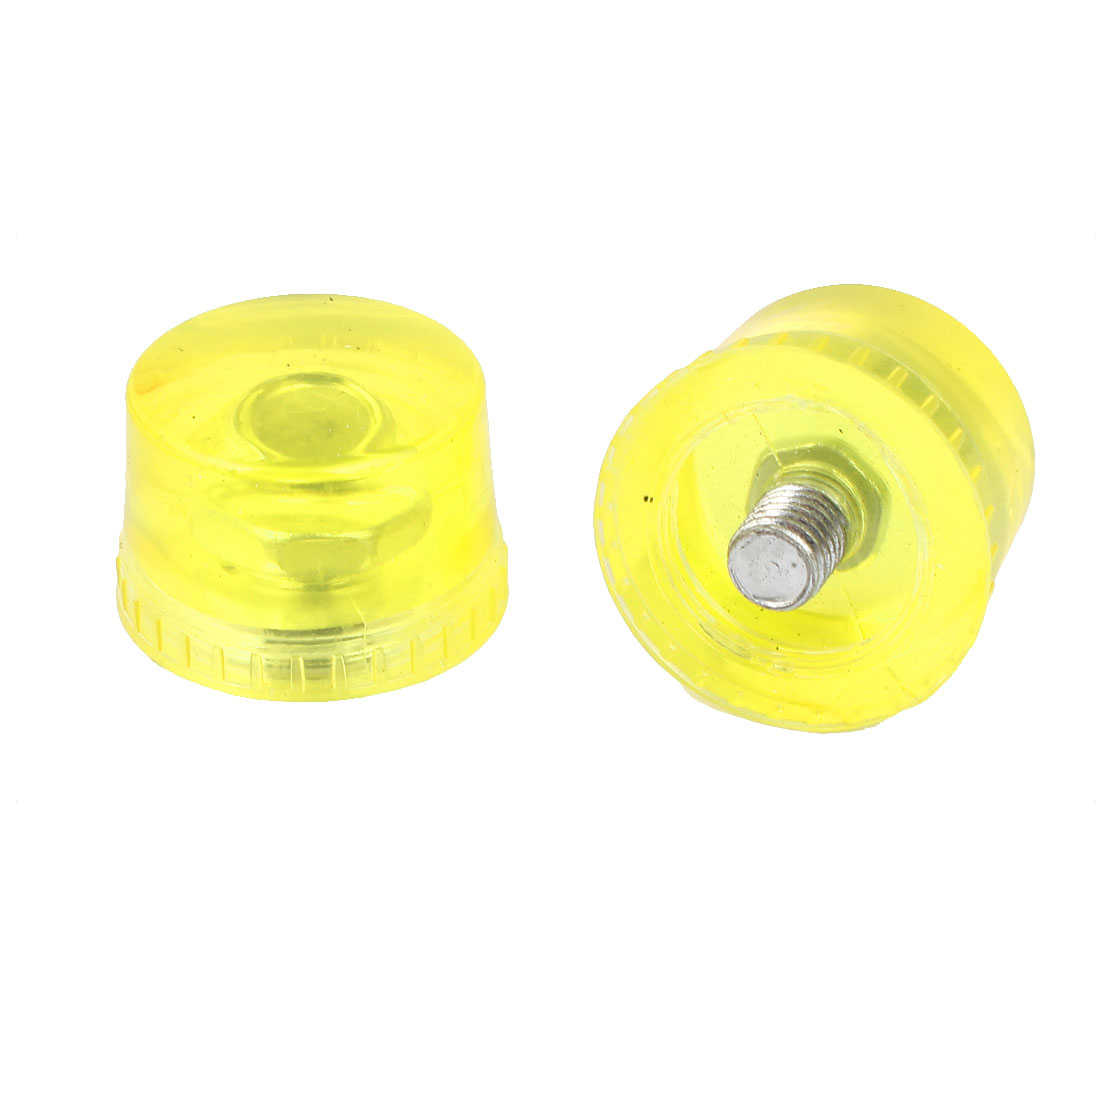 Unique Bargains Replaceable 10mm Thread Head Plastic Hammer Tip 40mm Dia Clear Yellow 2pcs